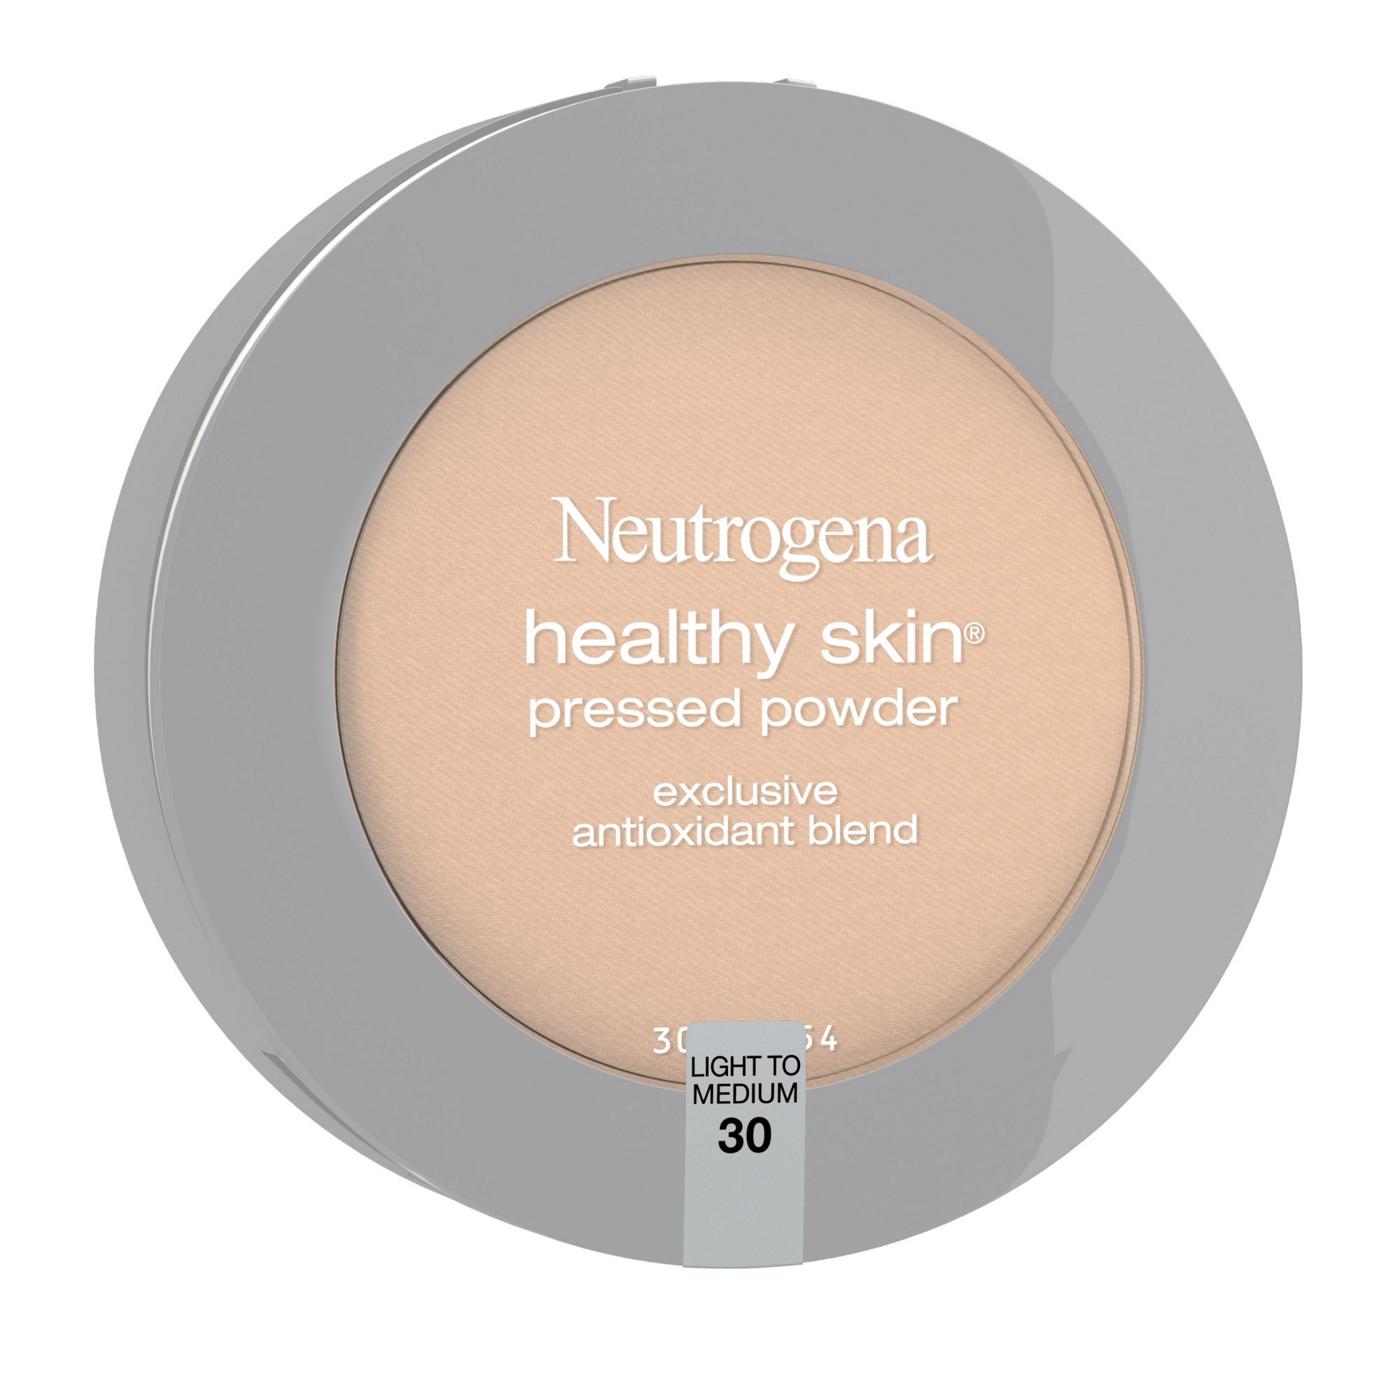 Neutrogena Healthy Skin Pressed Powder 30 Light To Medium; image 4 of 5